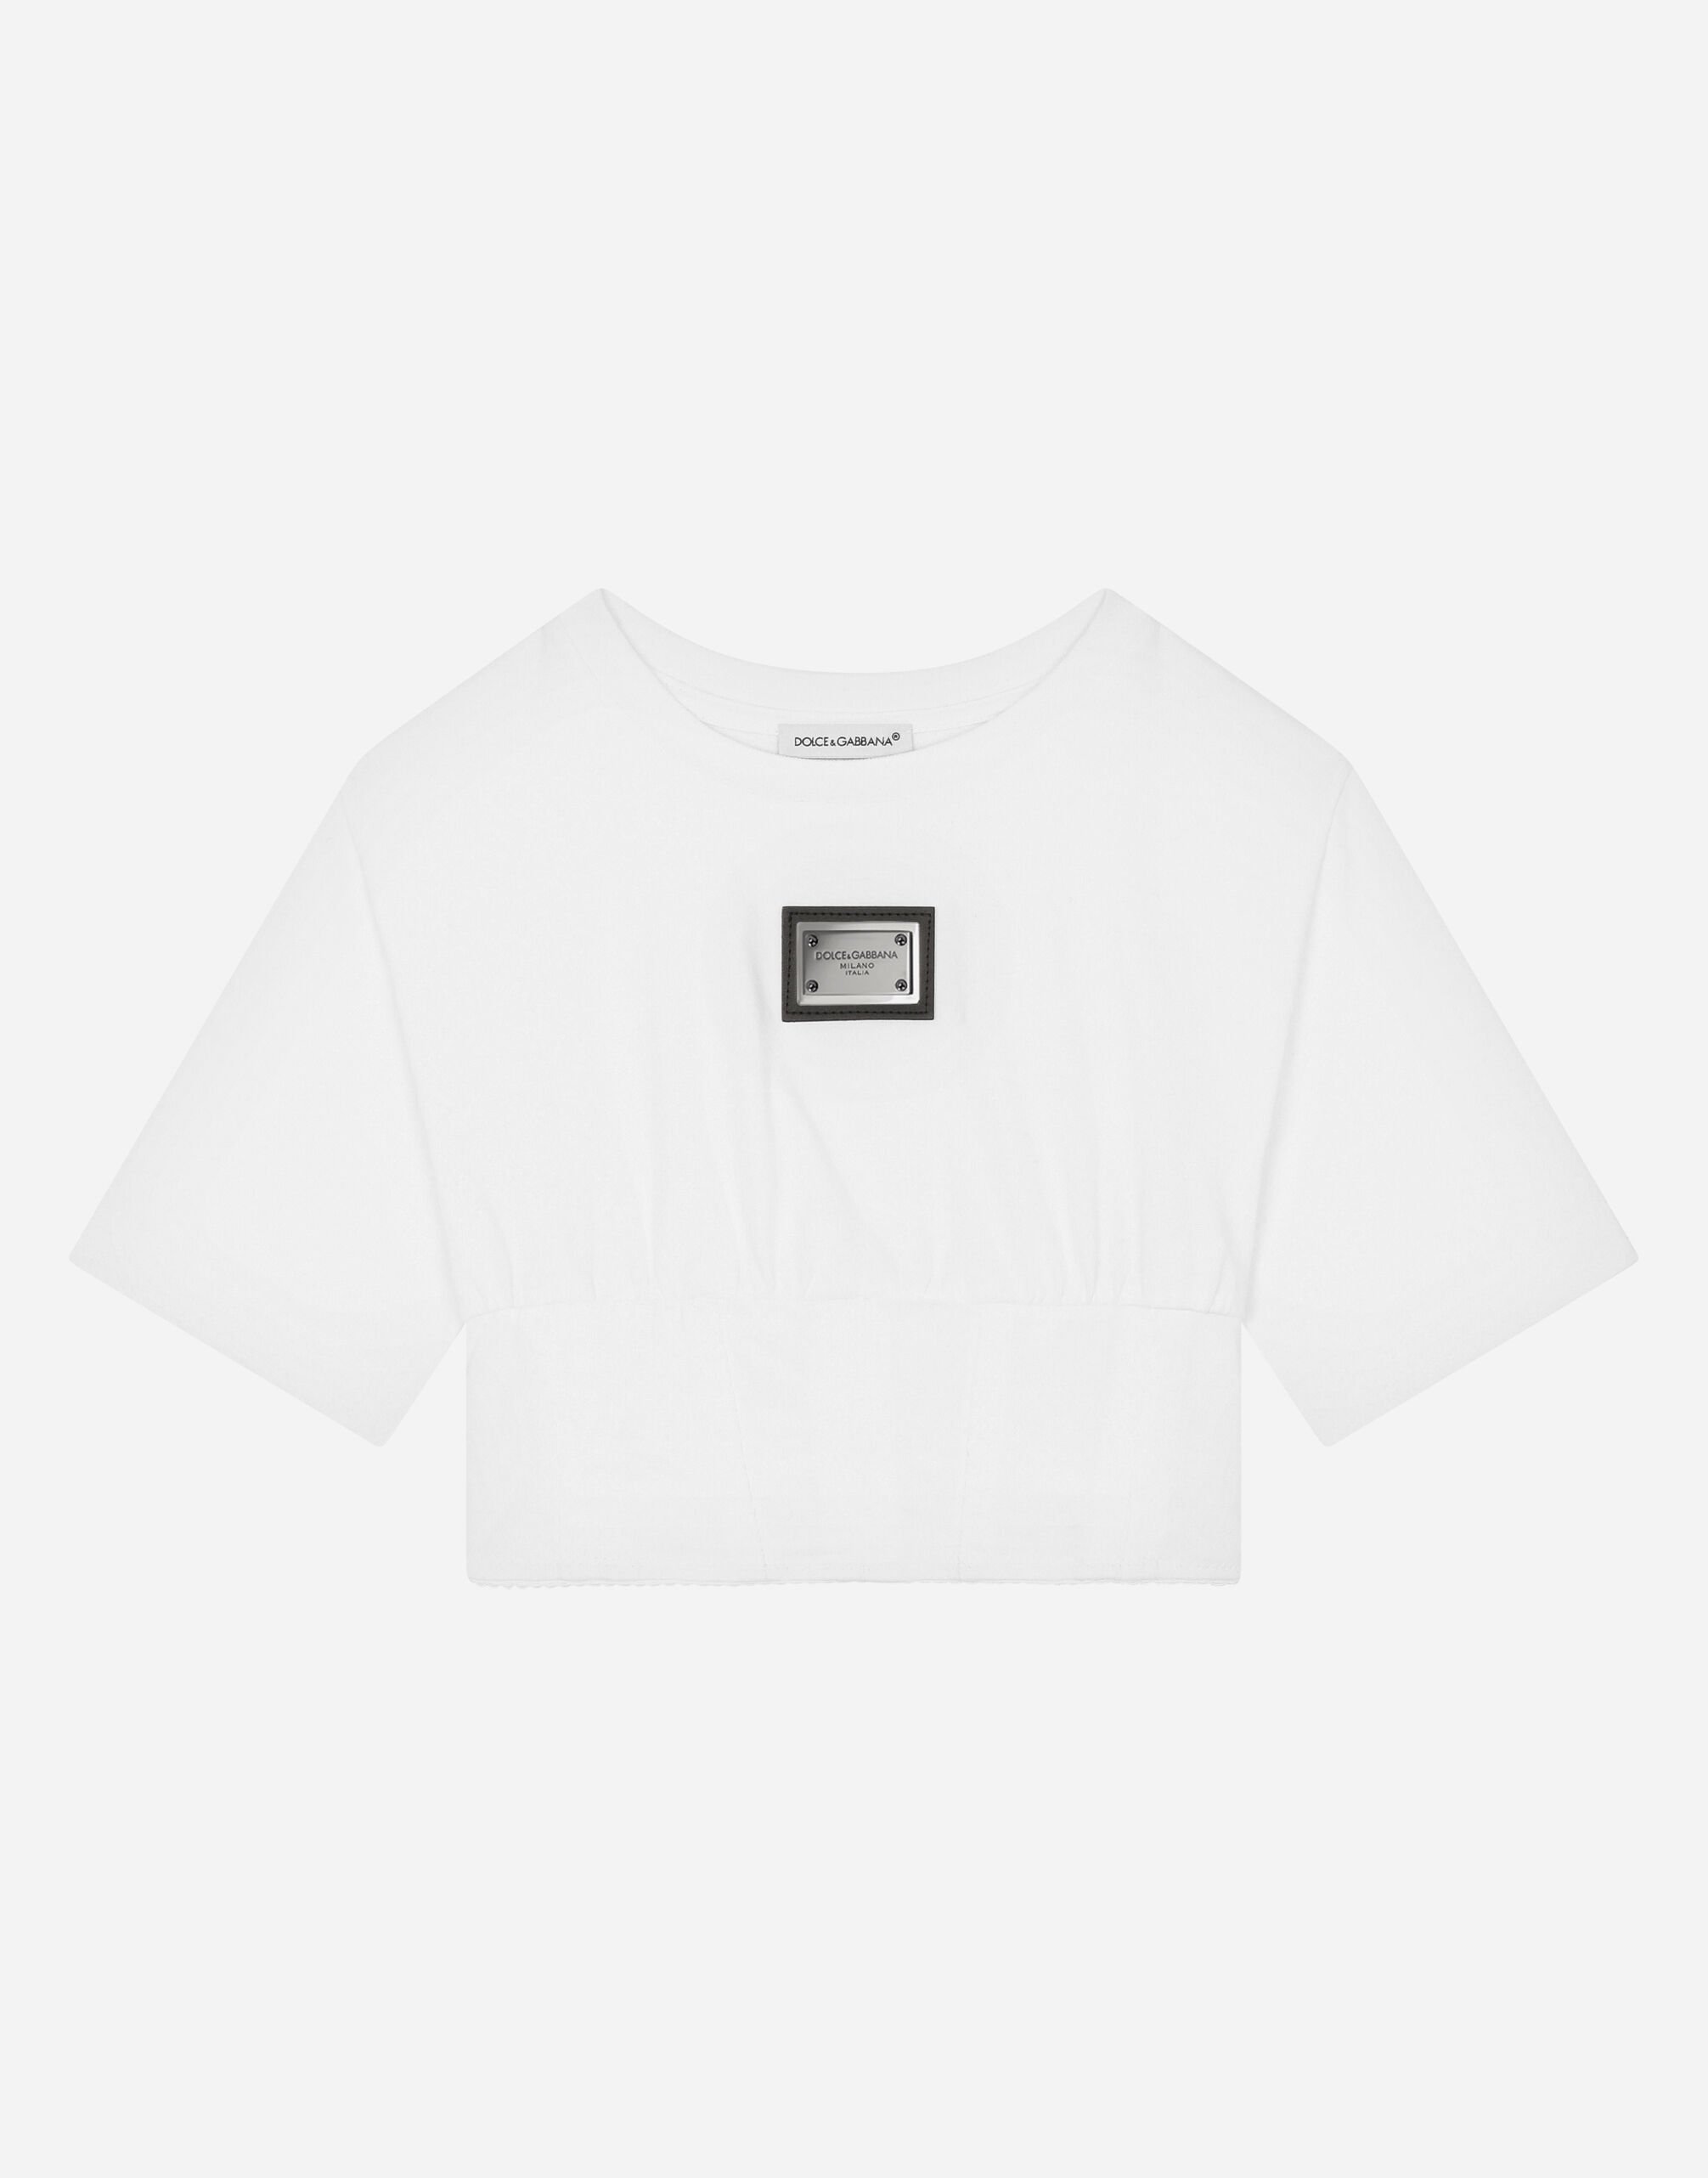 Dolce&Gabbana Jersey T-shirt with corset details White L5JTJQG7J6Q